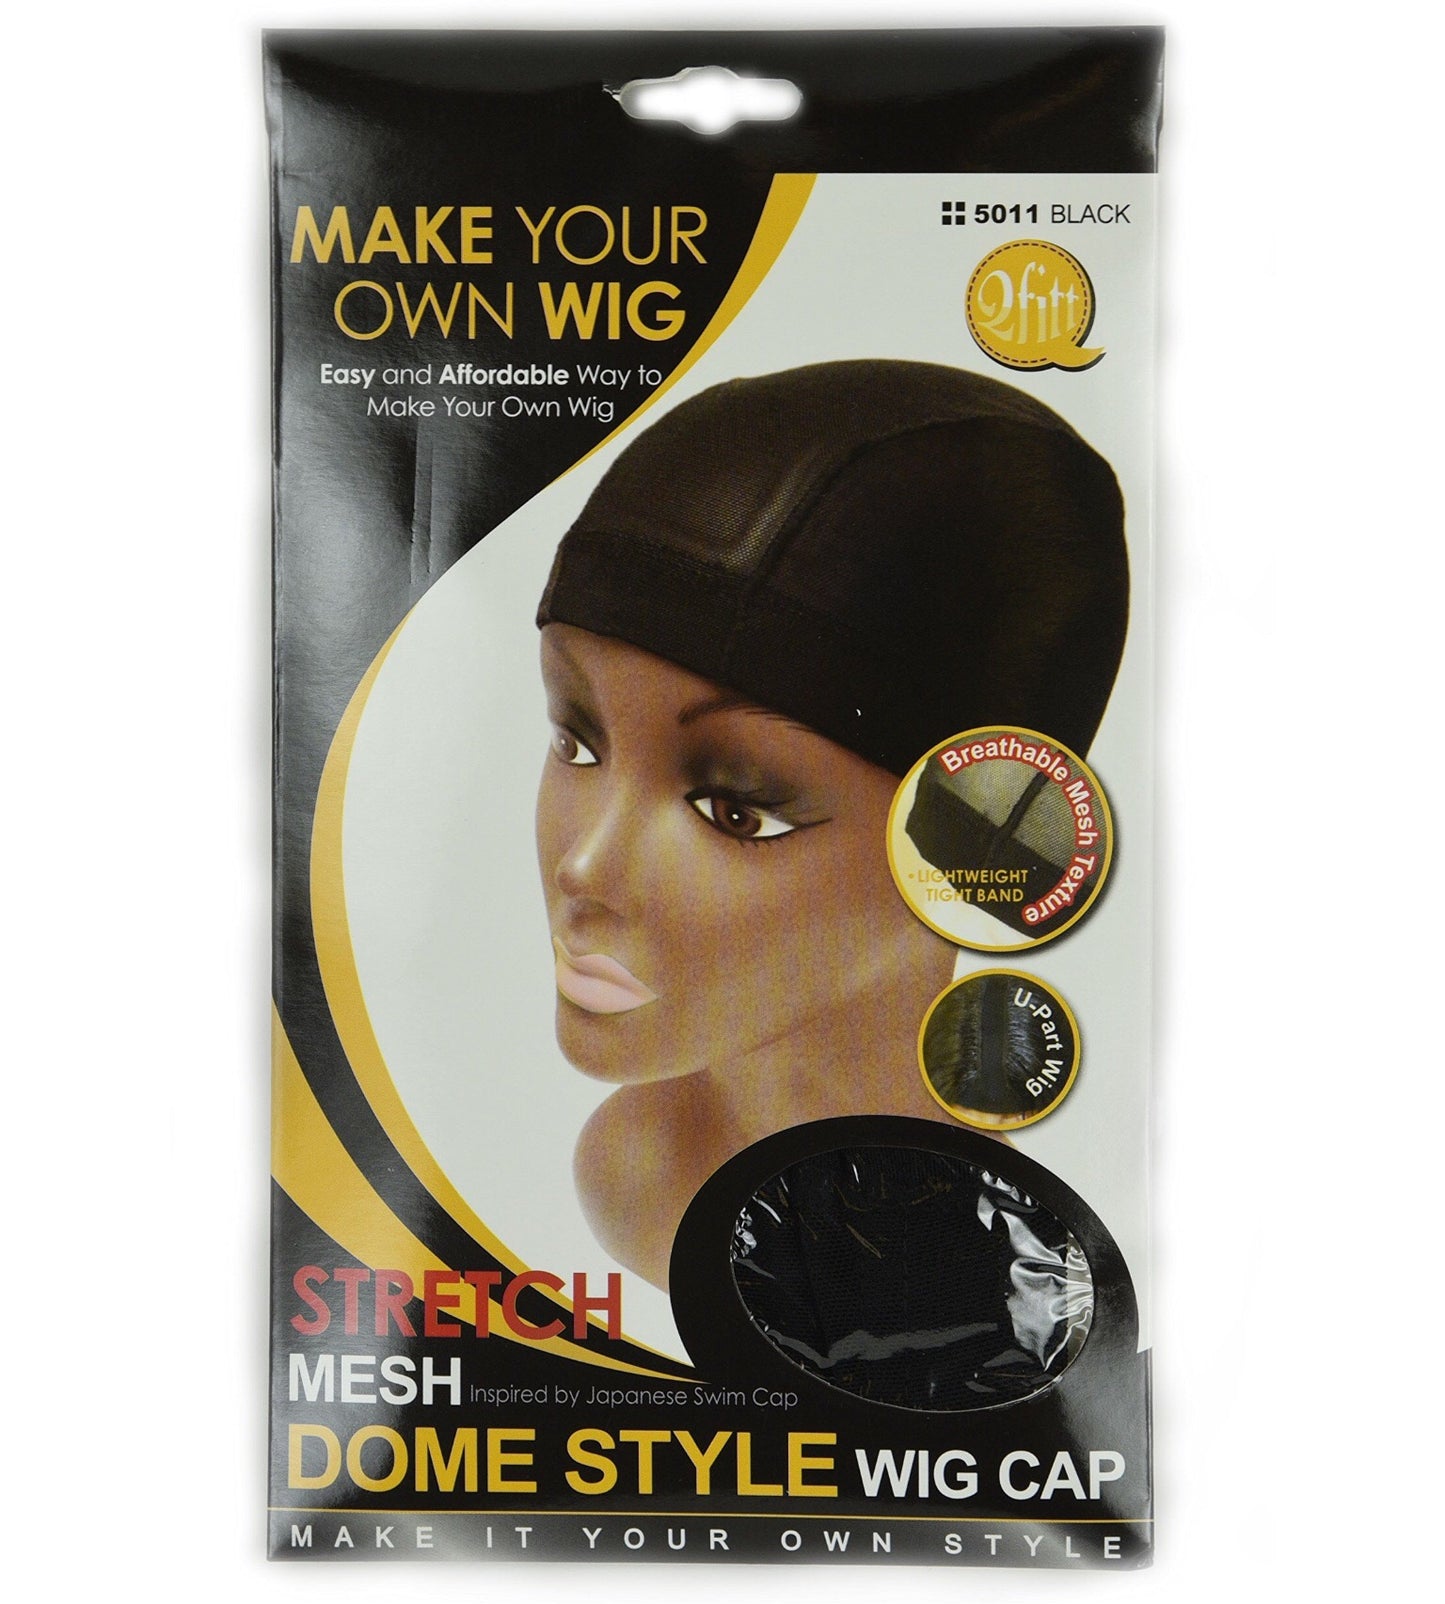 Qfitt Span Dome Style Wig Cap